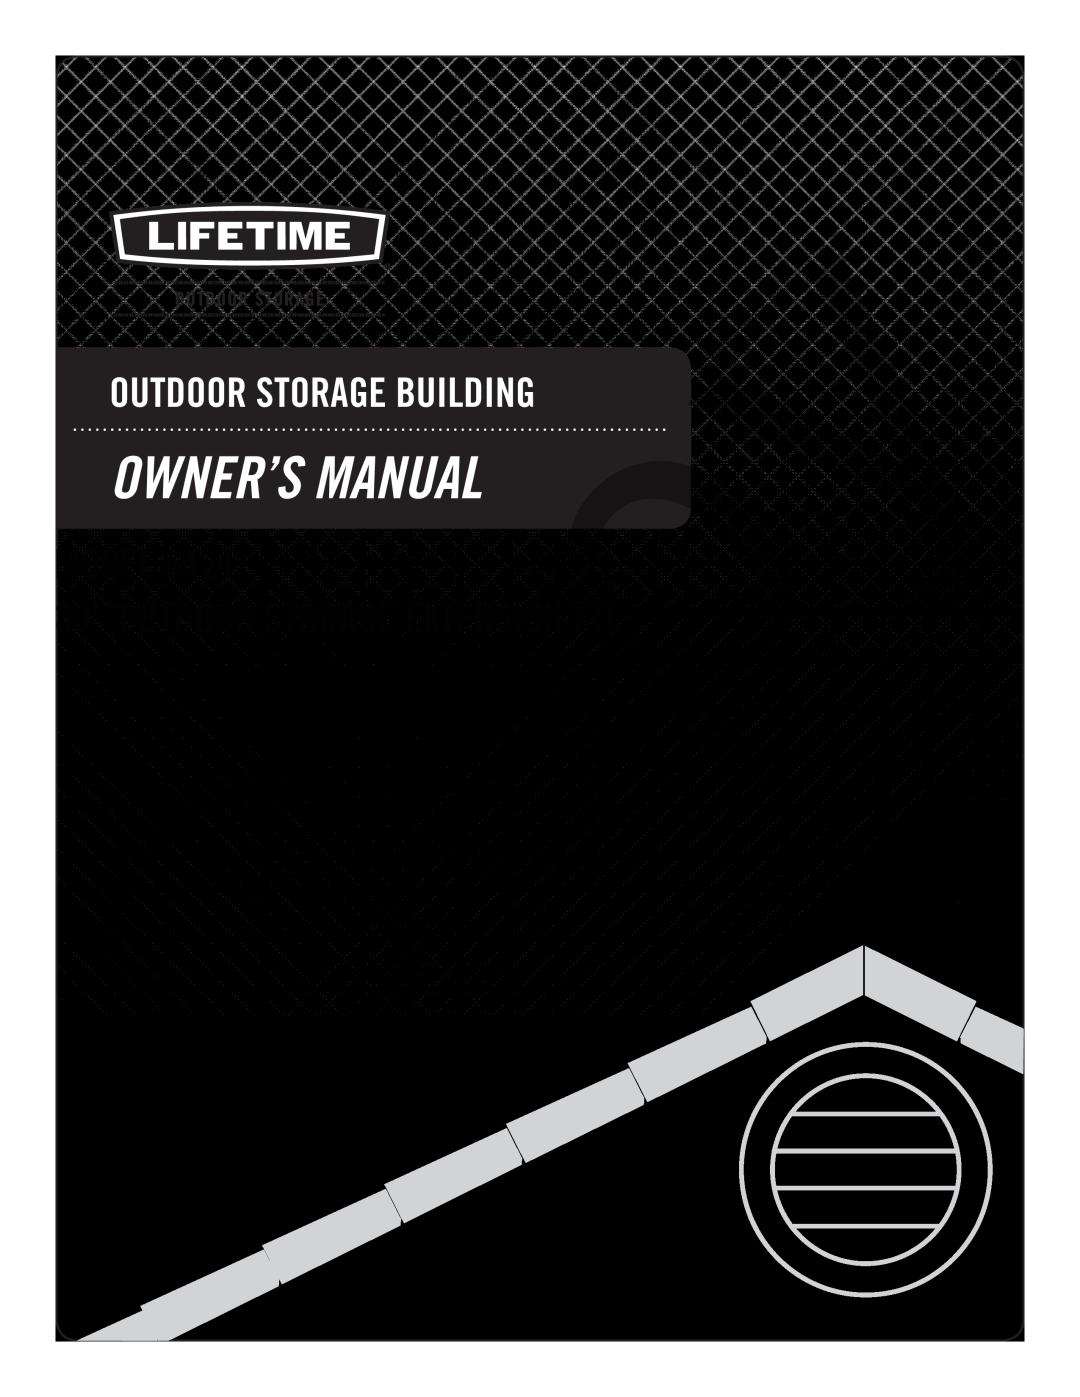 AB Soft 6424 manual Outdoor Storage Building, MODEL 30” OUTDOOR STORAGE EXTENSION KIT, O U T D O O R S T O R A G E 